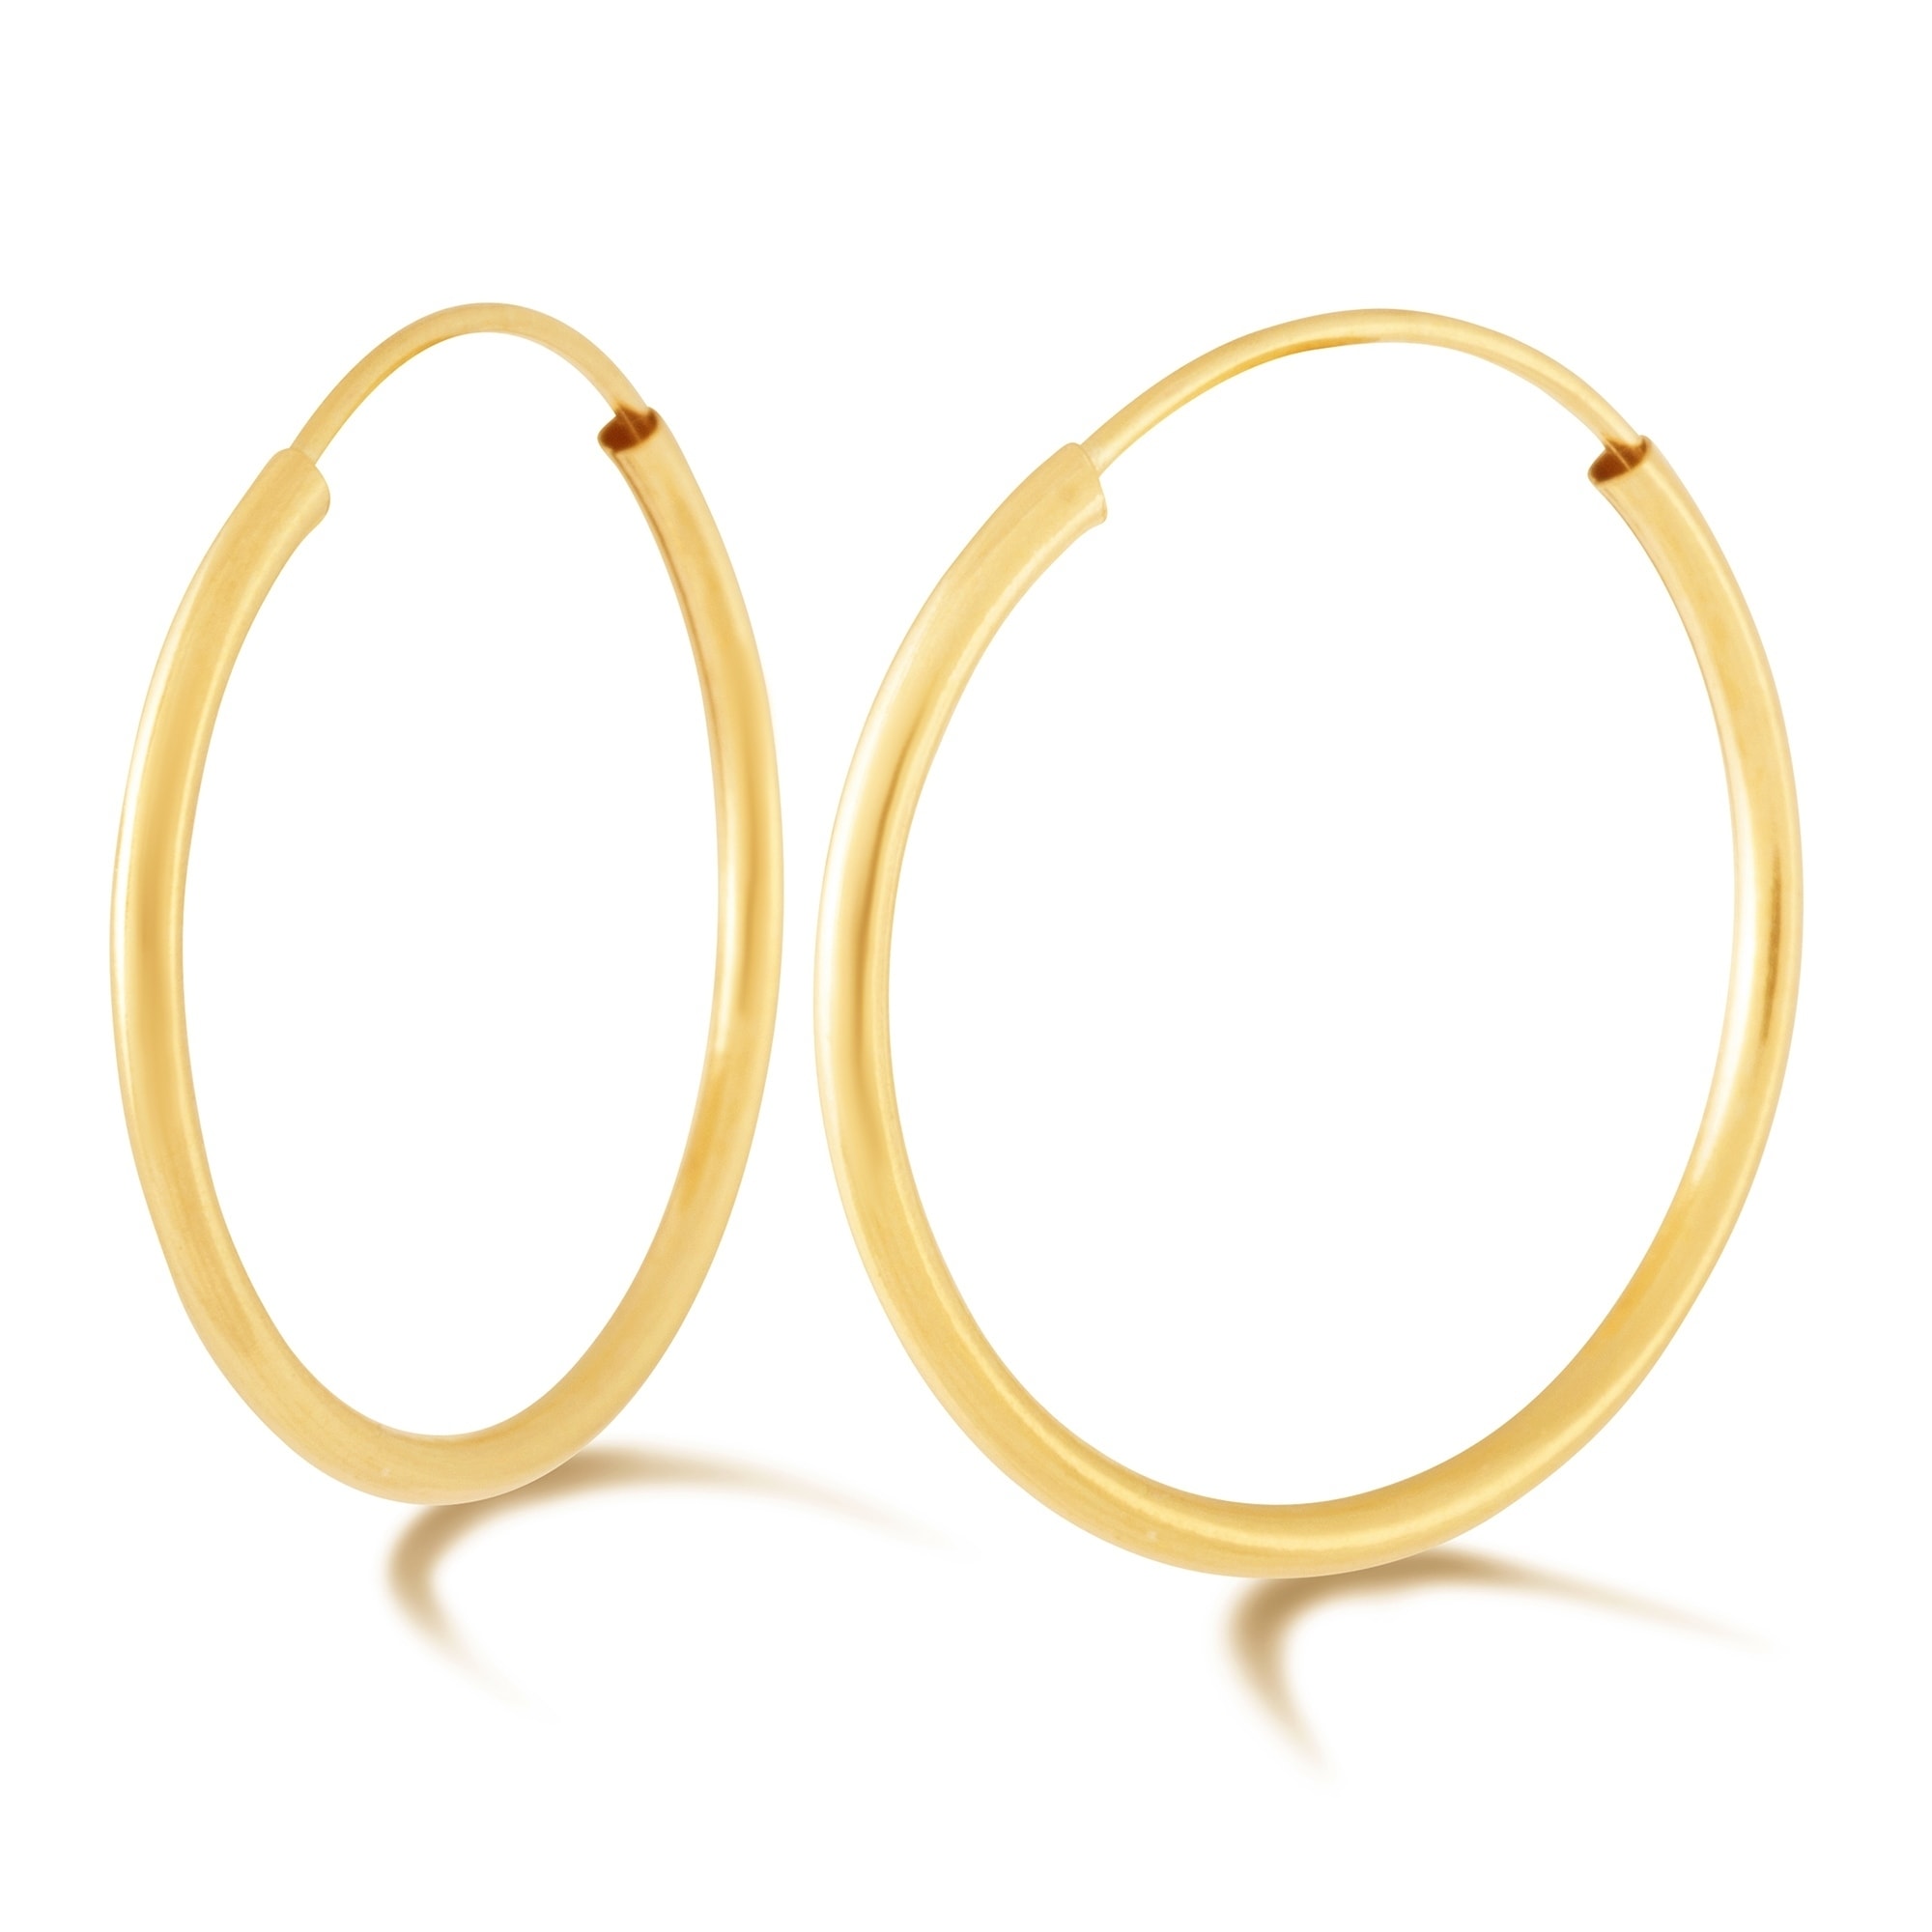 1.18 Diameter Women's 14k Yellow Gold 1mm Wide Endless Classic Hoop Earrings 